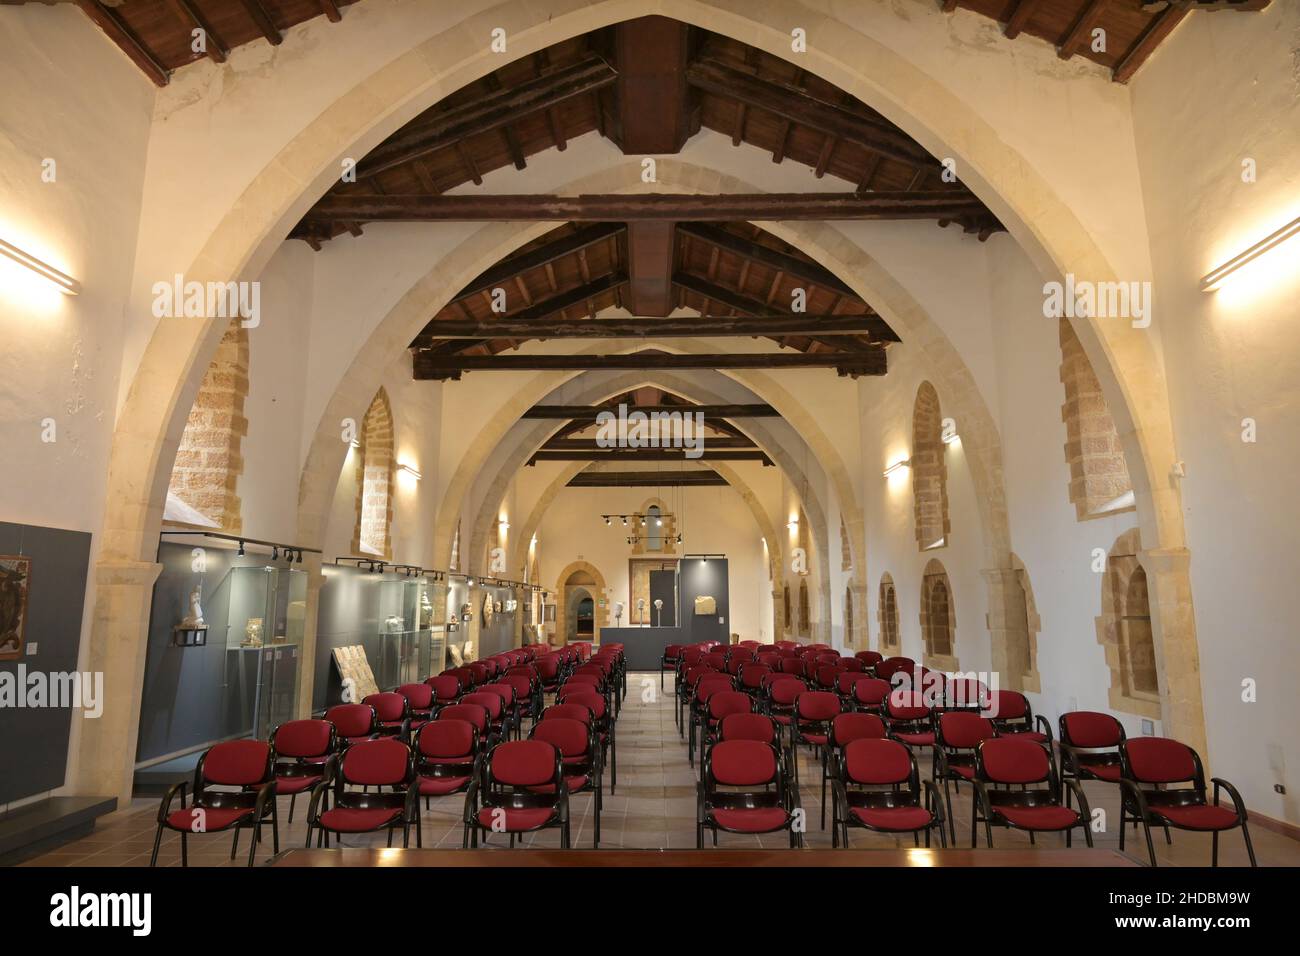 Ehemaliges Dormitorium (Schlafsaal), Festsaal, Zisterzienserkloster 'Monache cistercensi santo spirito', Agrigent, Sizilien, Italien Foto Stock